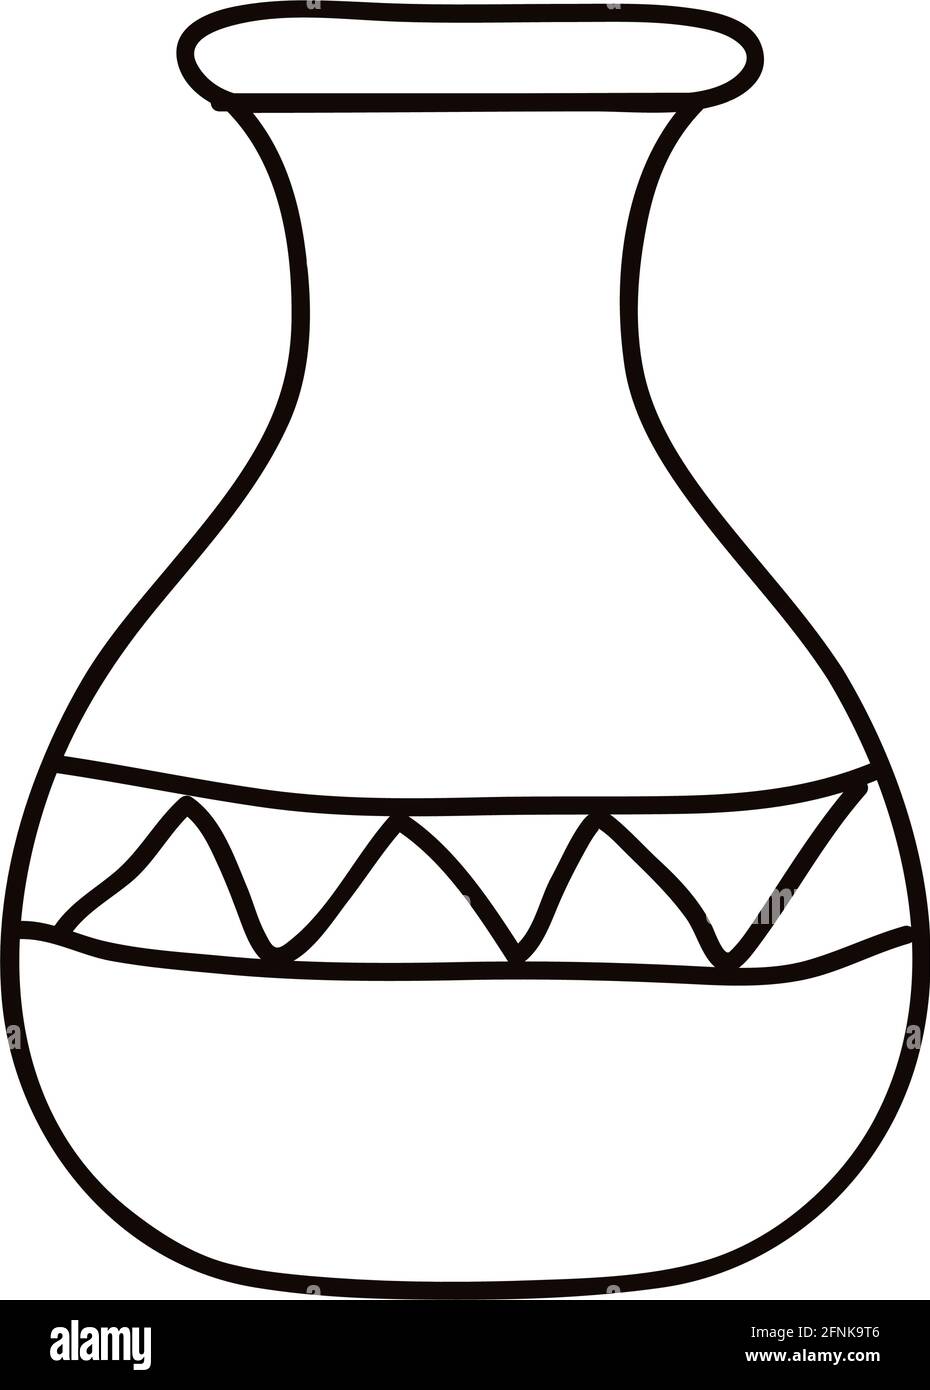 jarra cerámica estilo dibujo a mano Imagen Vector de stock - Alamy